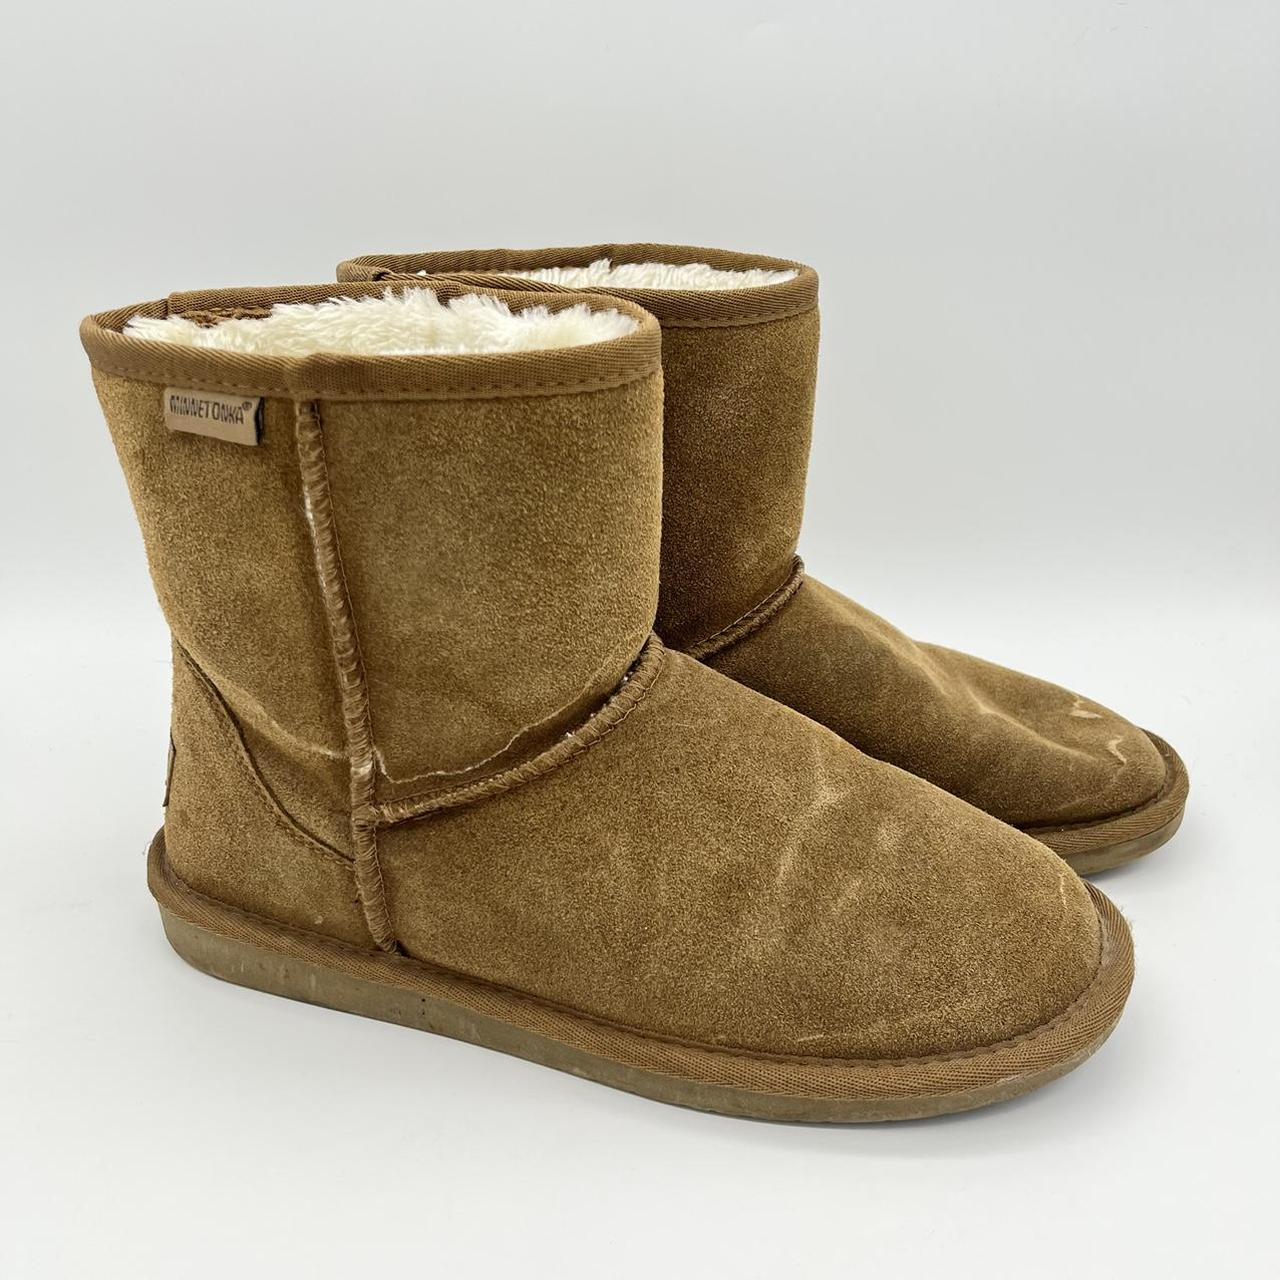 Product Image 1 - Minnetonka Cream Boots

•Minnetonka Tan Fur